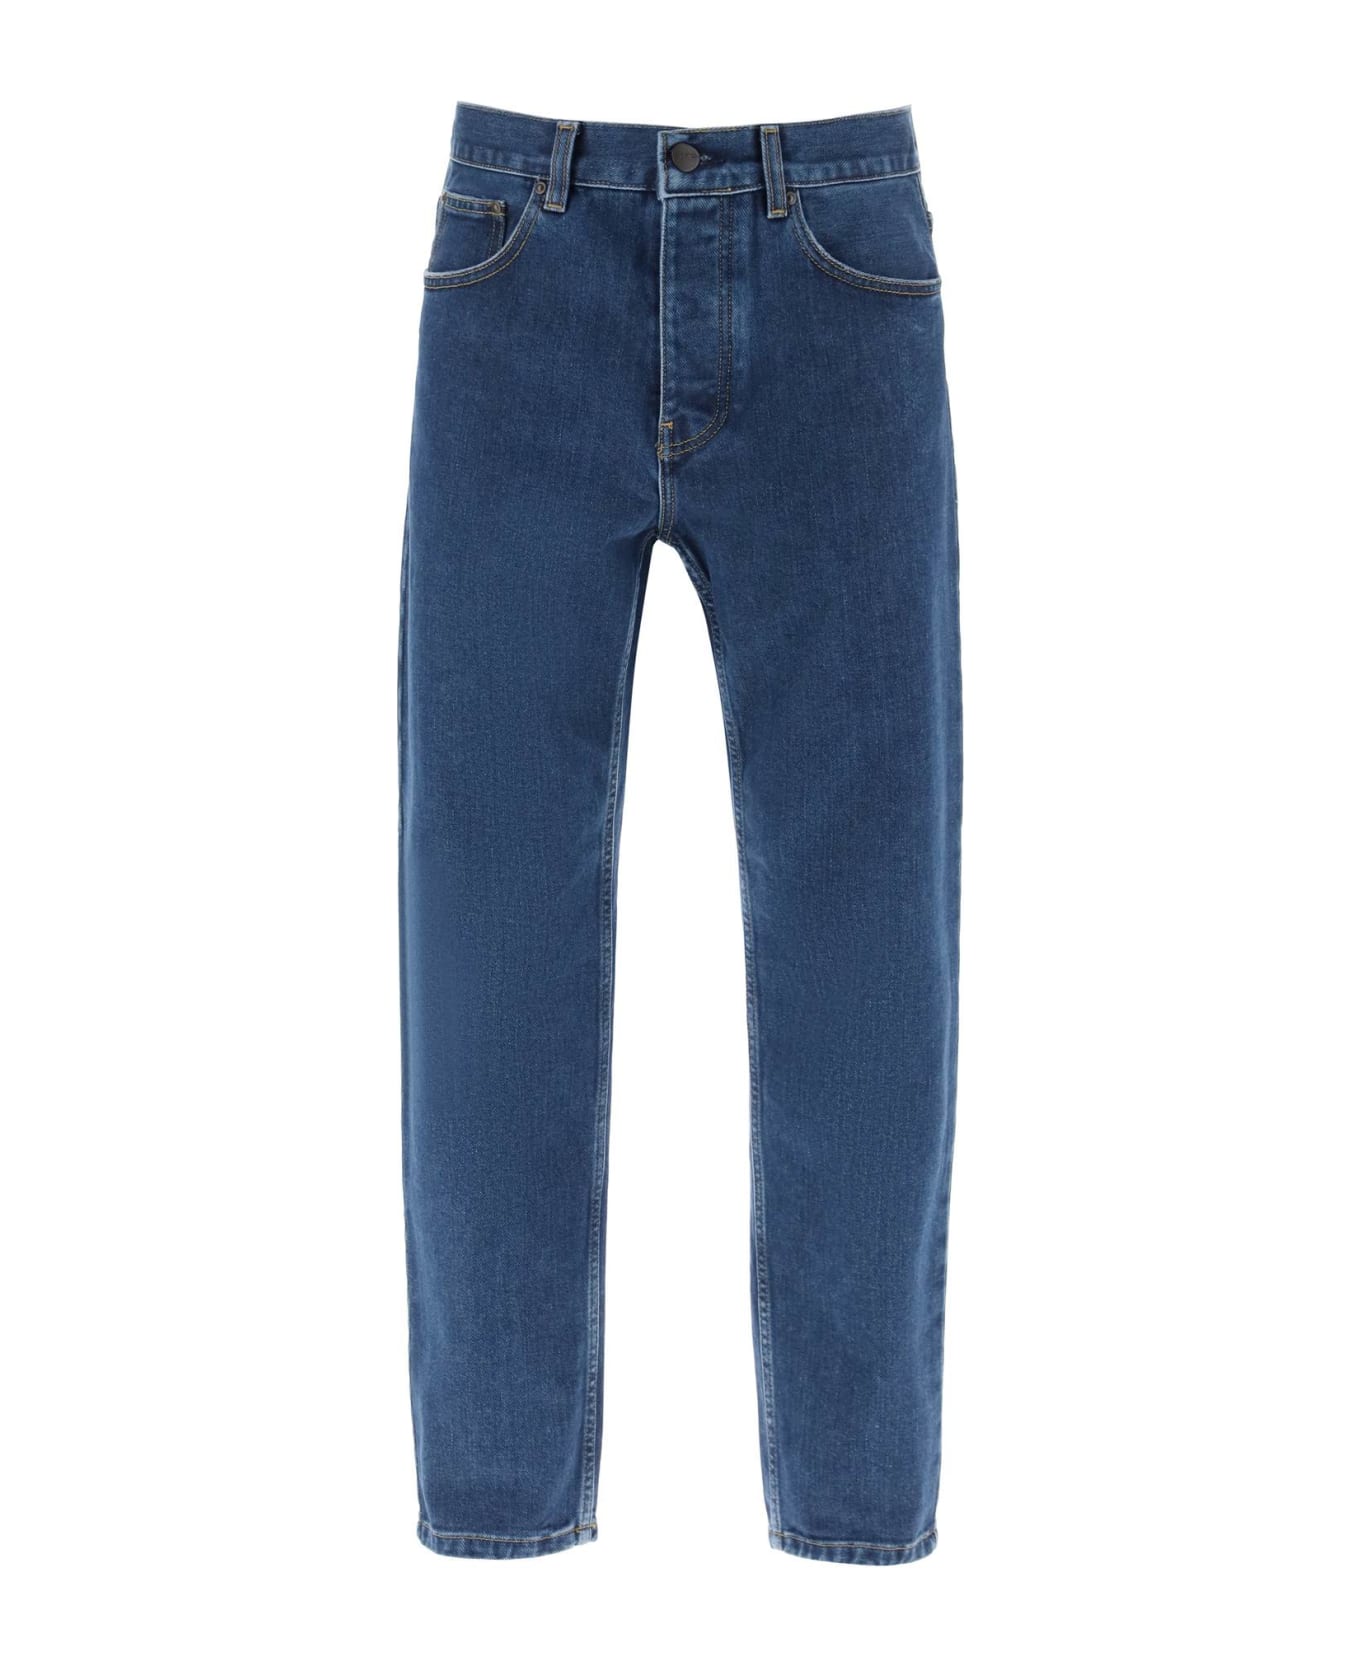 Carhartt Newel Jeans - Blue